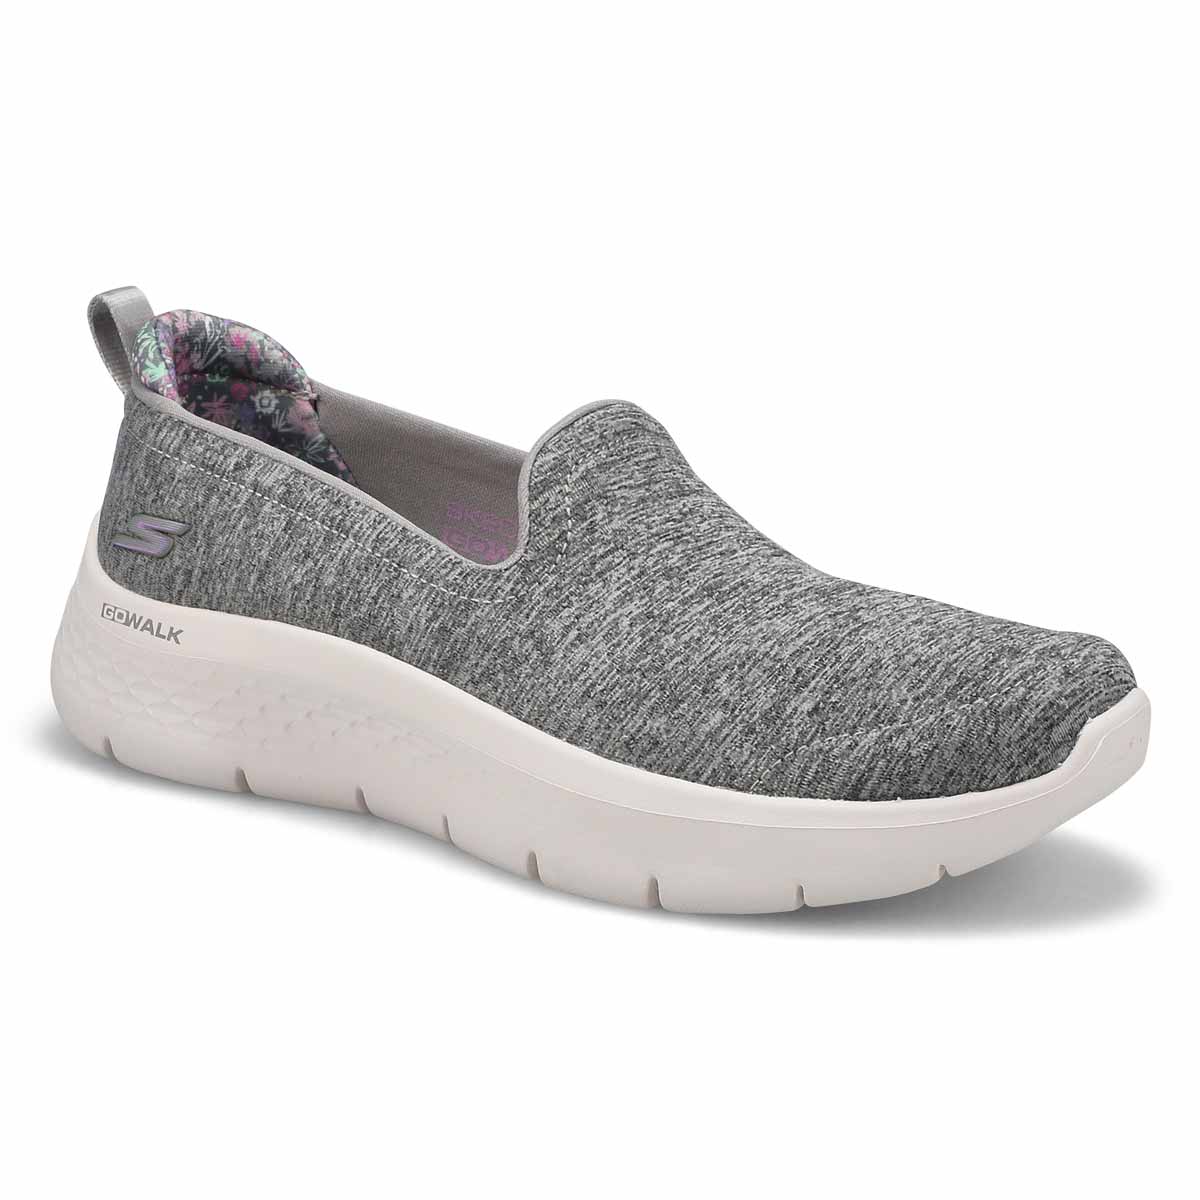 Skechers Women's Go Walk Flex Slip On Sneaker | SoftMoc.com